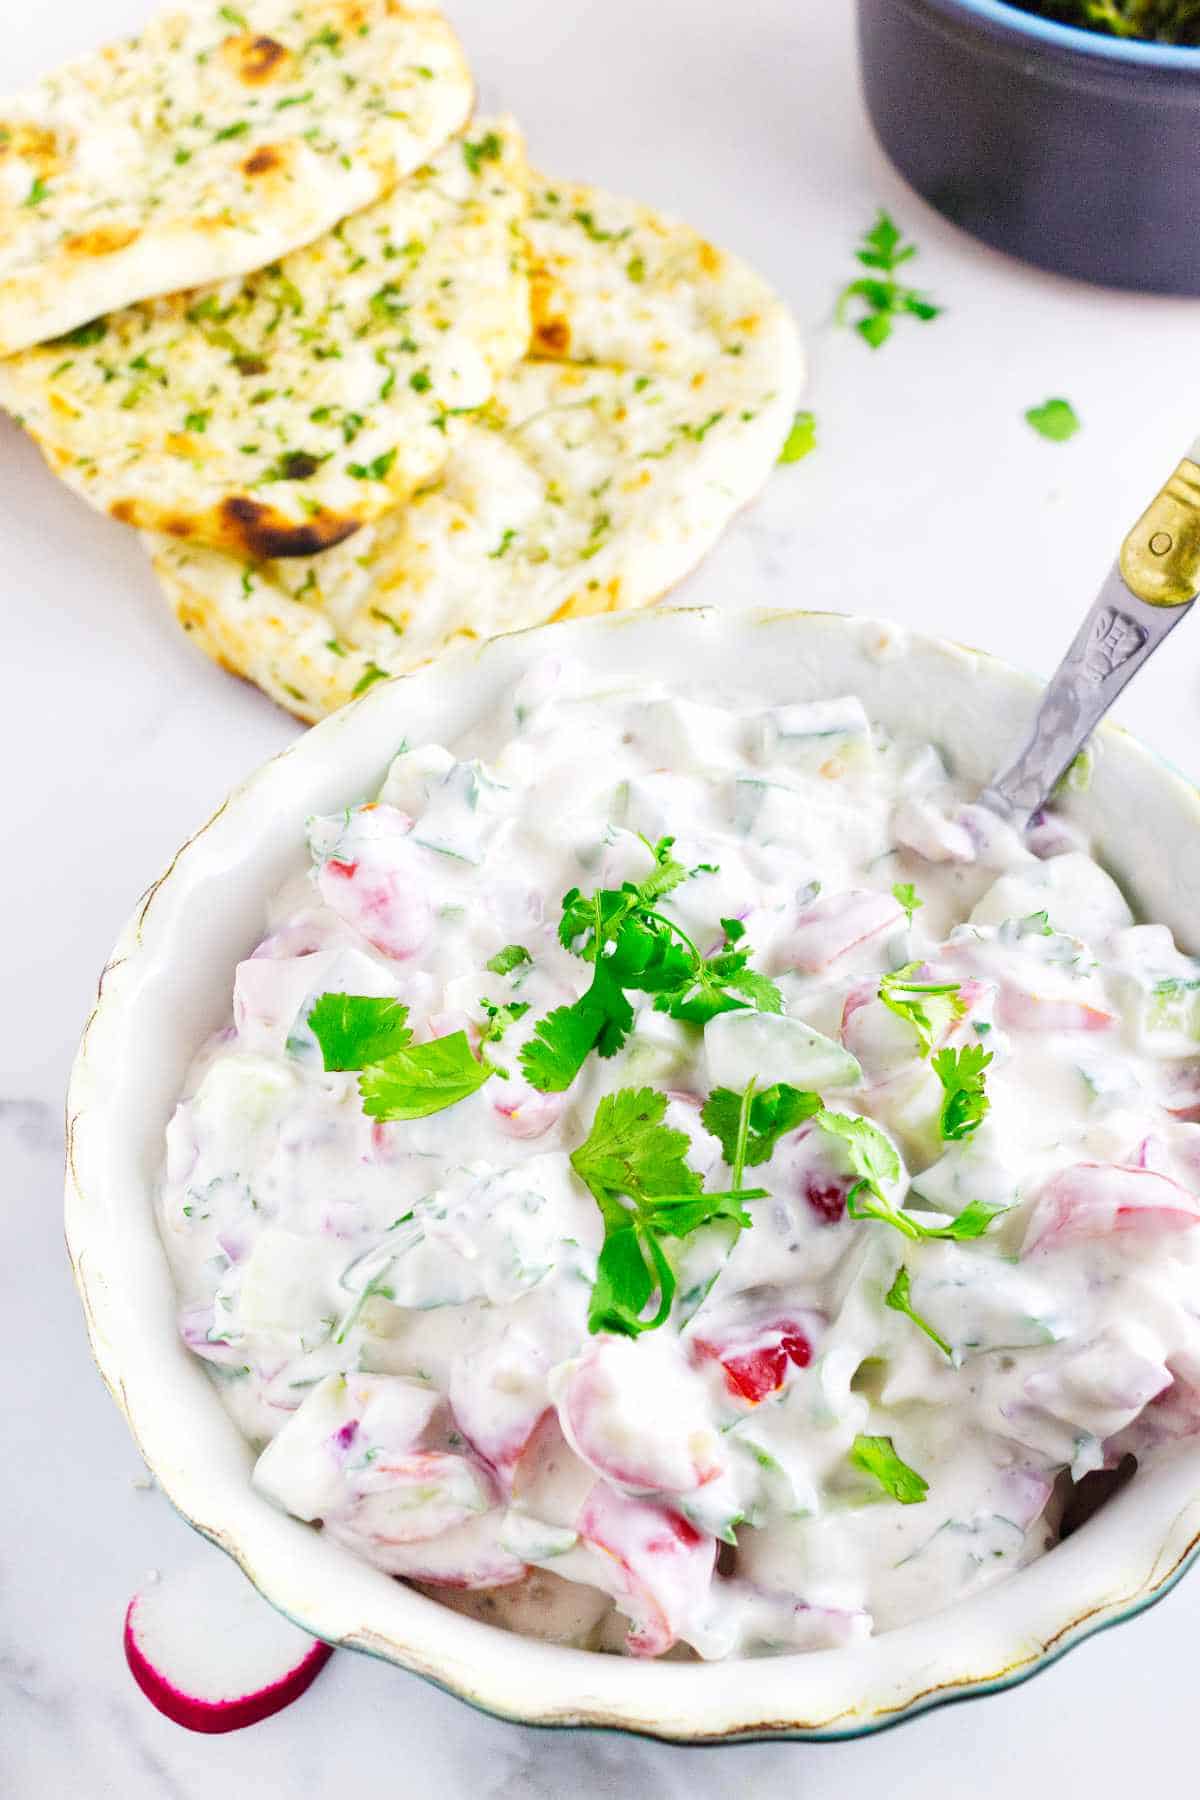 Indian cucumber and yogurt salad with naan bread.